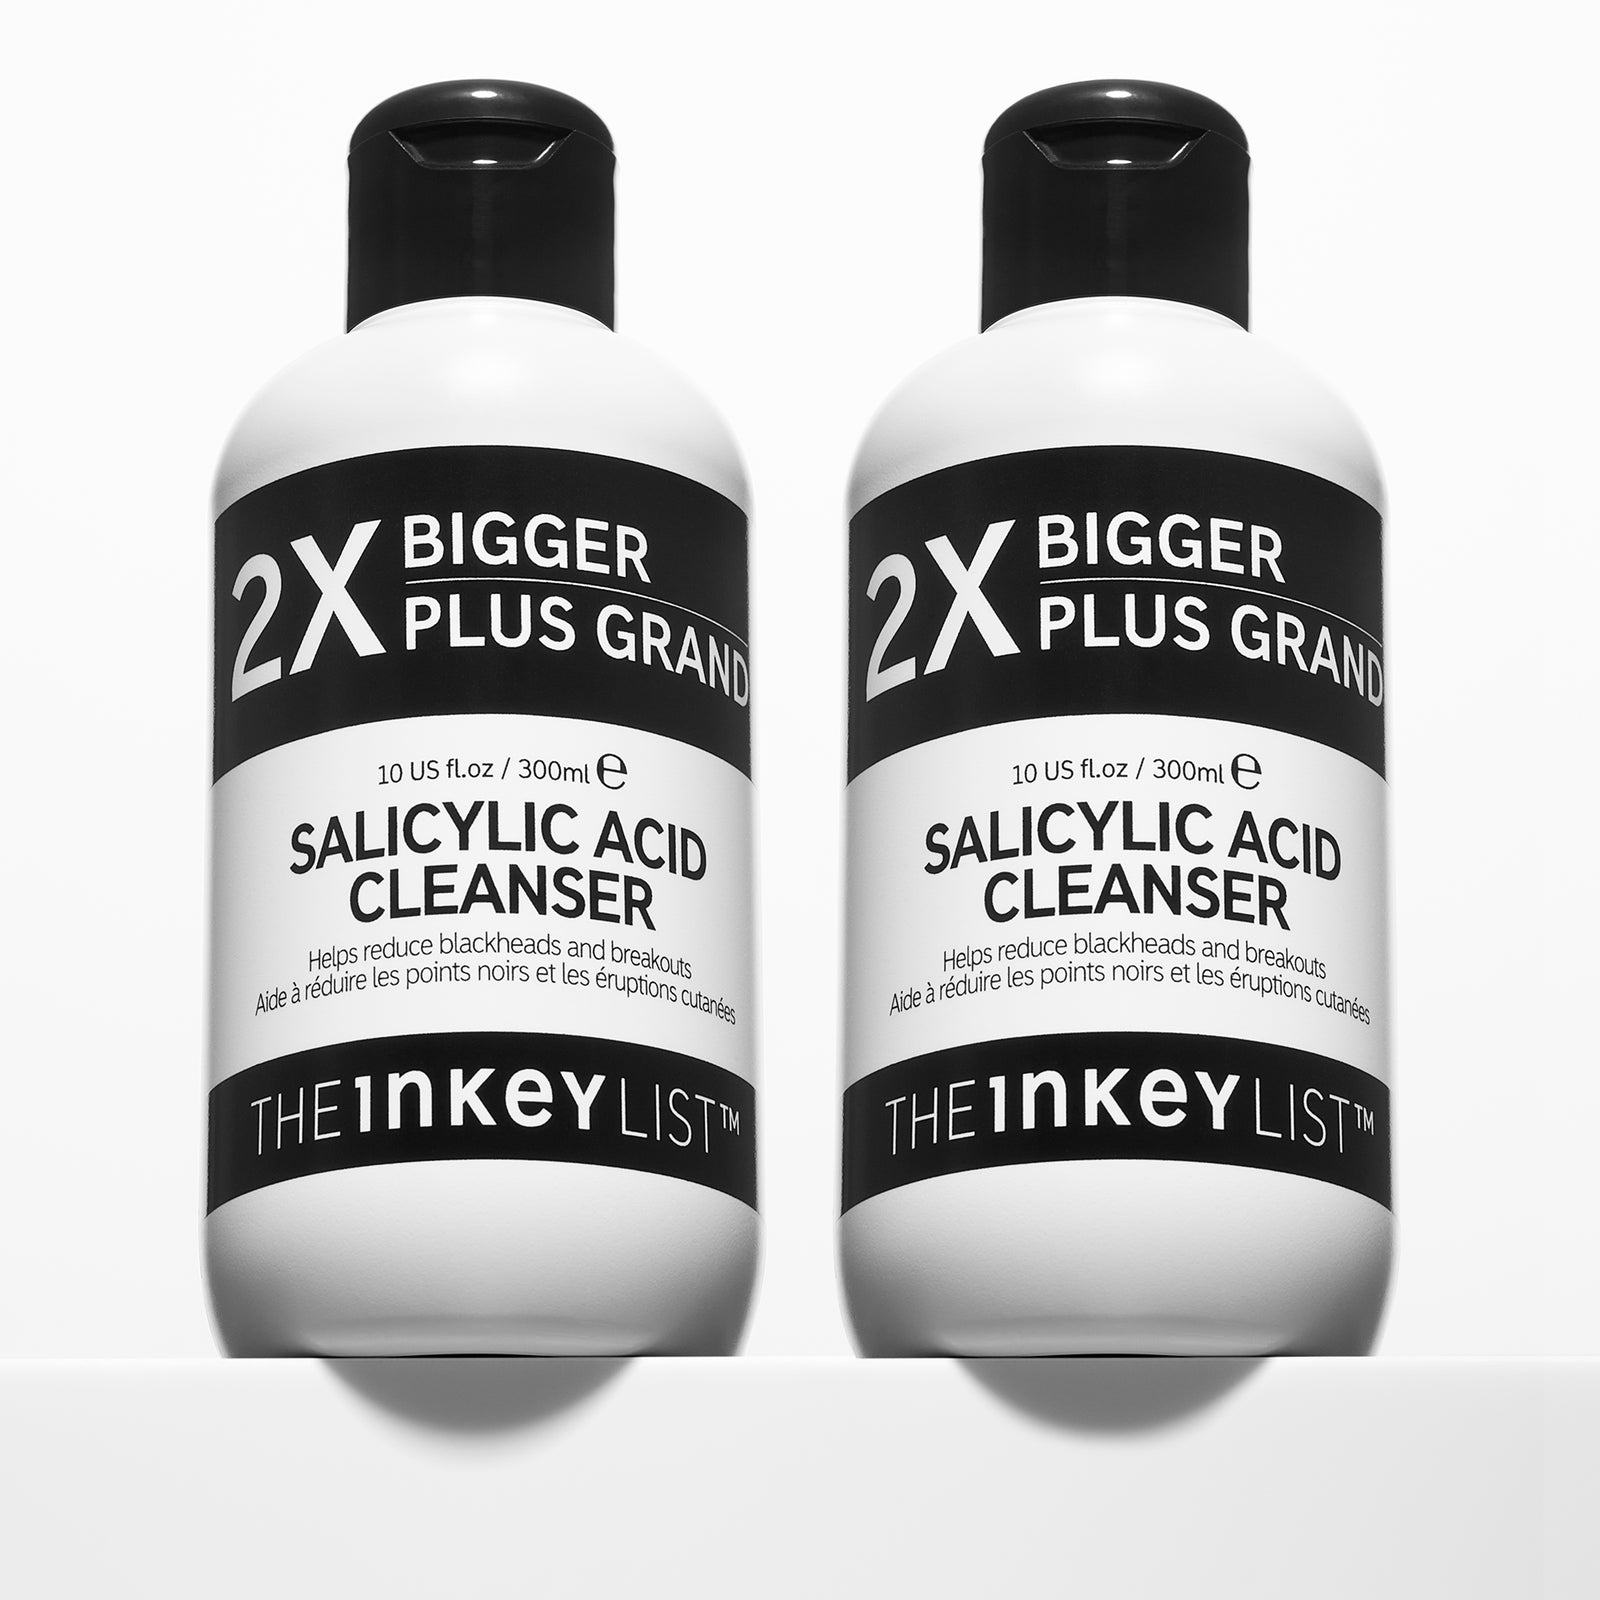 Supersize Salicylic Acid Cleanser Duo shelf shot with white background